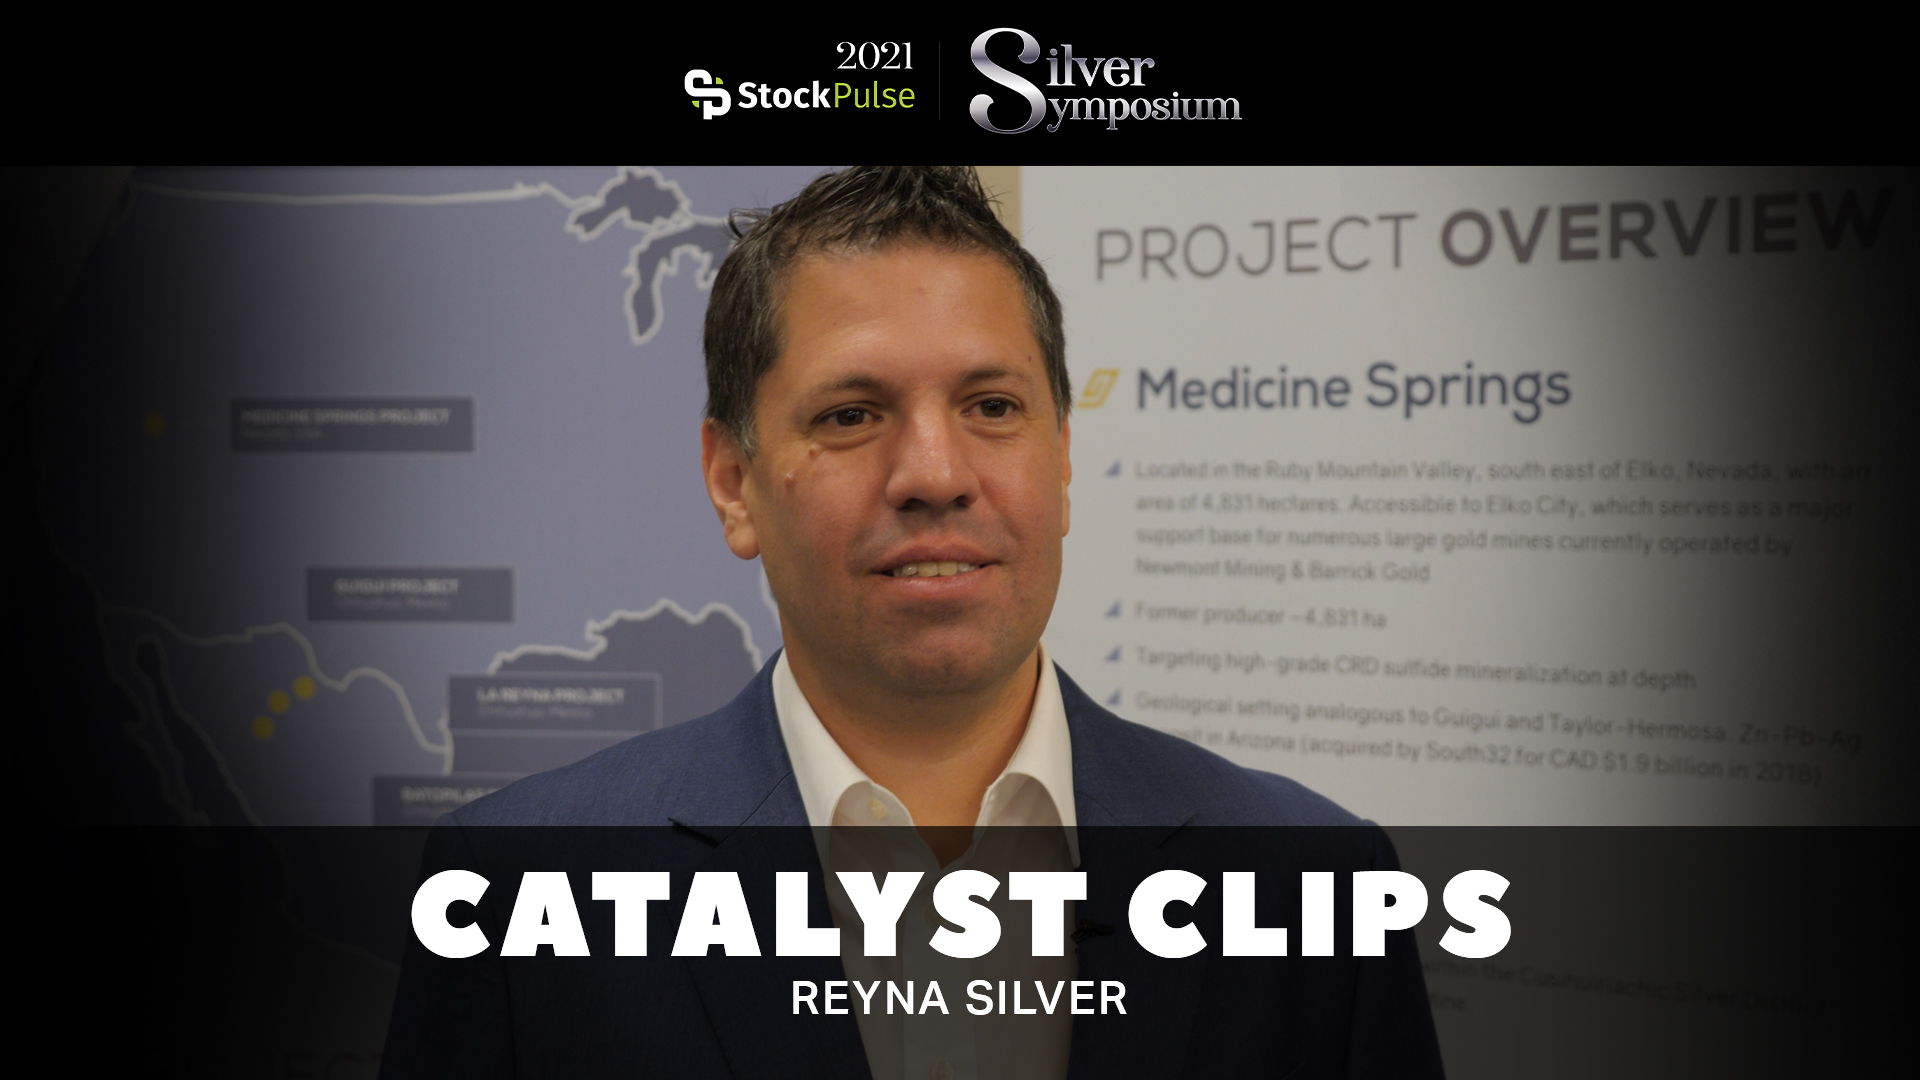 2021 StockPulse Silver Symposium Catalyst Clips | Jorge Ramiro Monroy of Reyna Silver